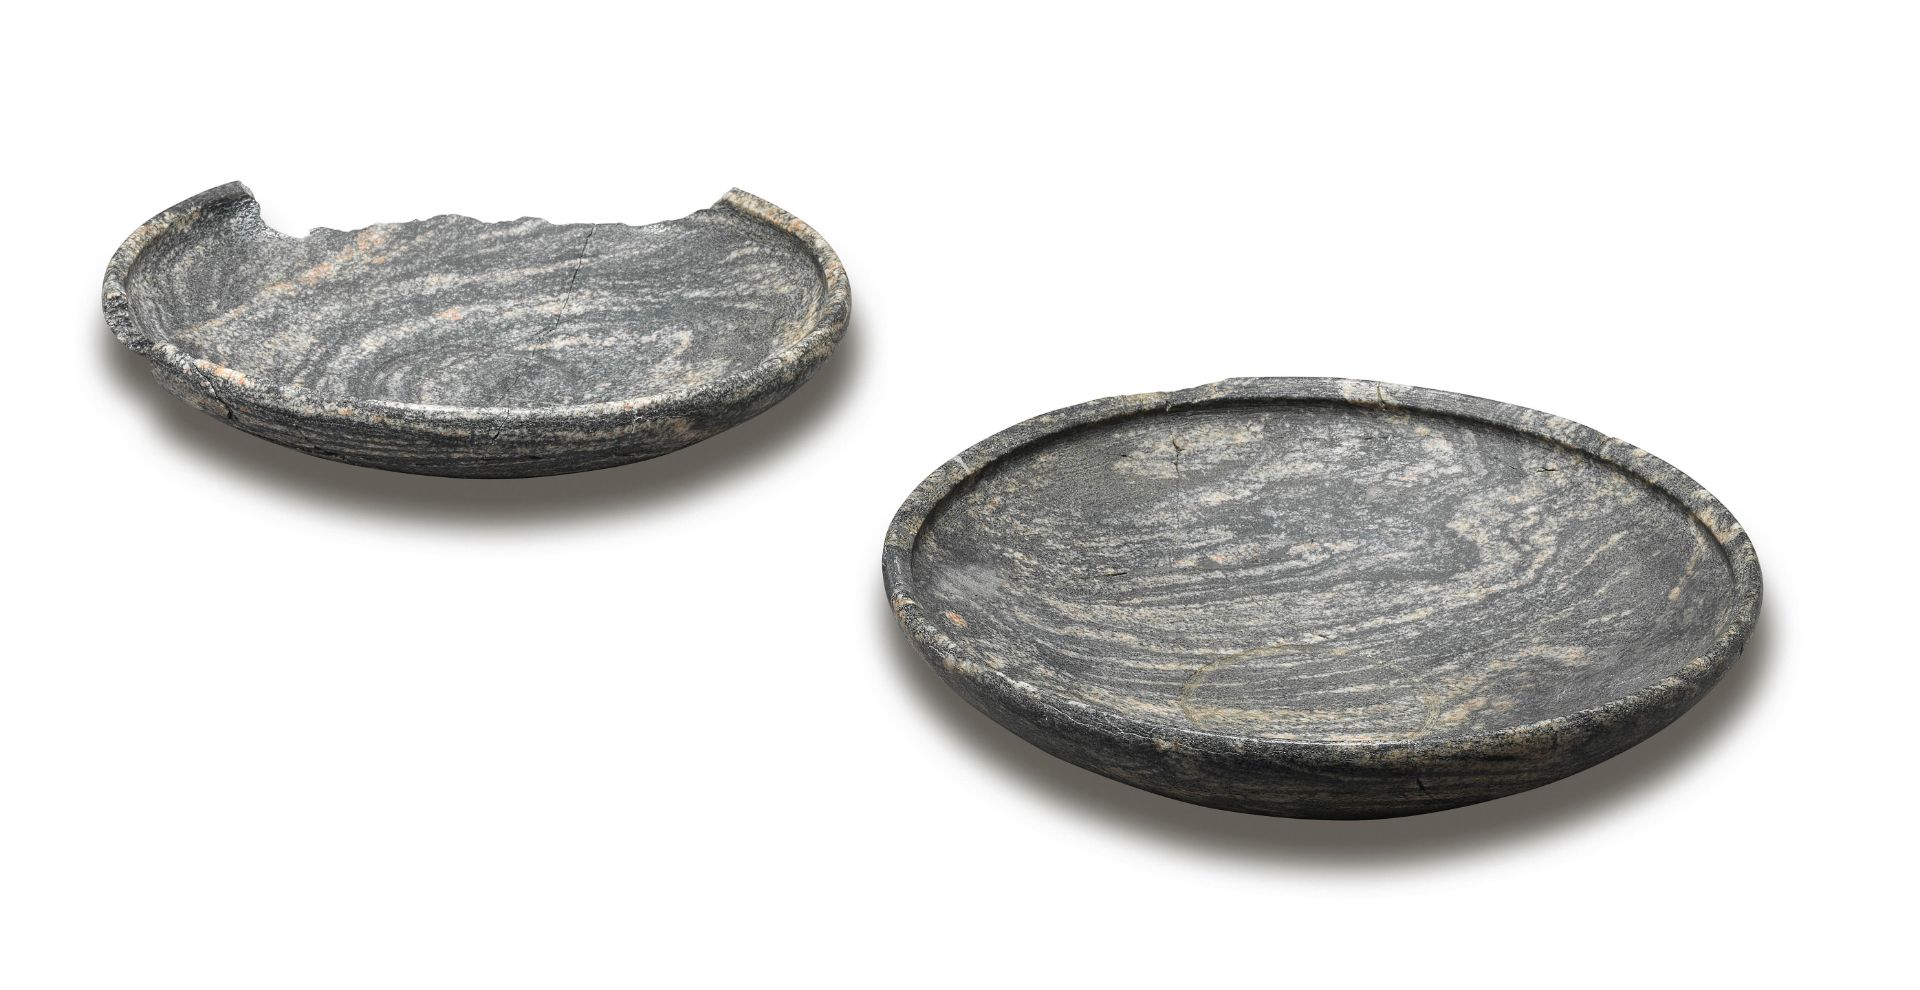 Two Egyptian stone bowls